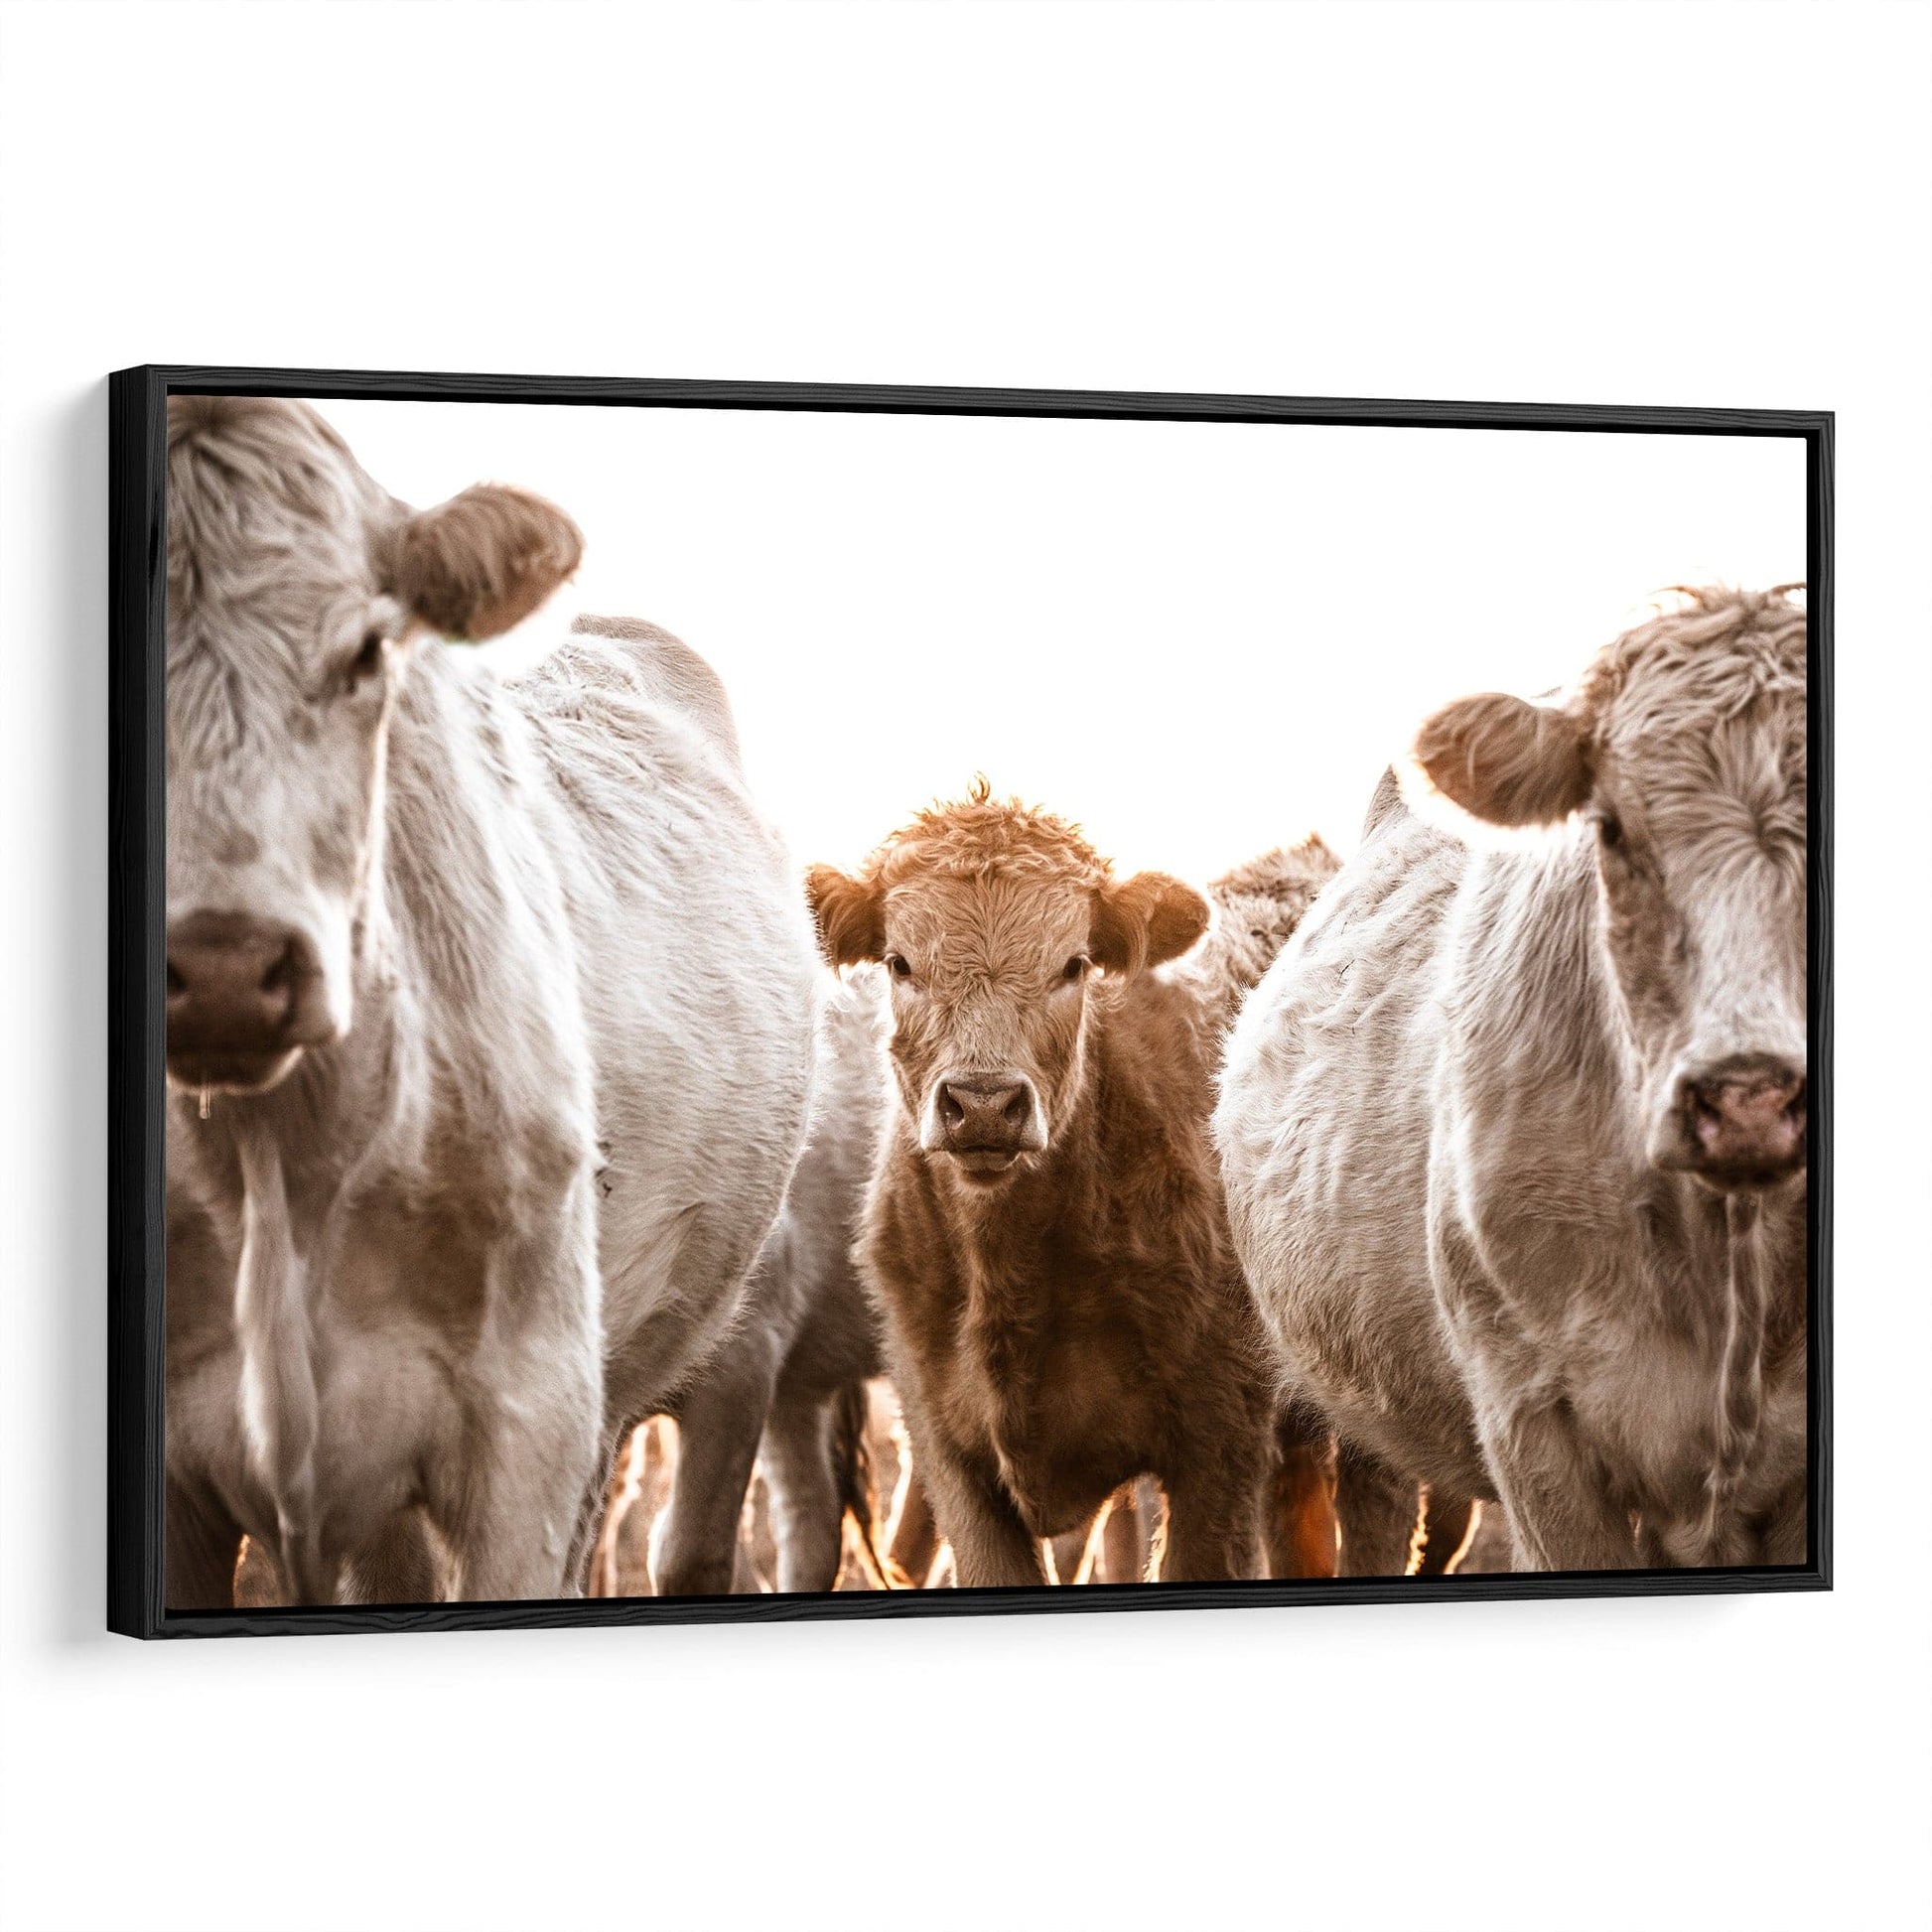 Western Cowboy Nursery Wall Art - Charolais Cows and Calf Canvas-Black Frame / 12 x 18 Inches Wall Art Teri James Photography